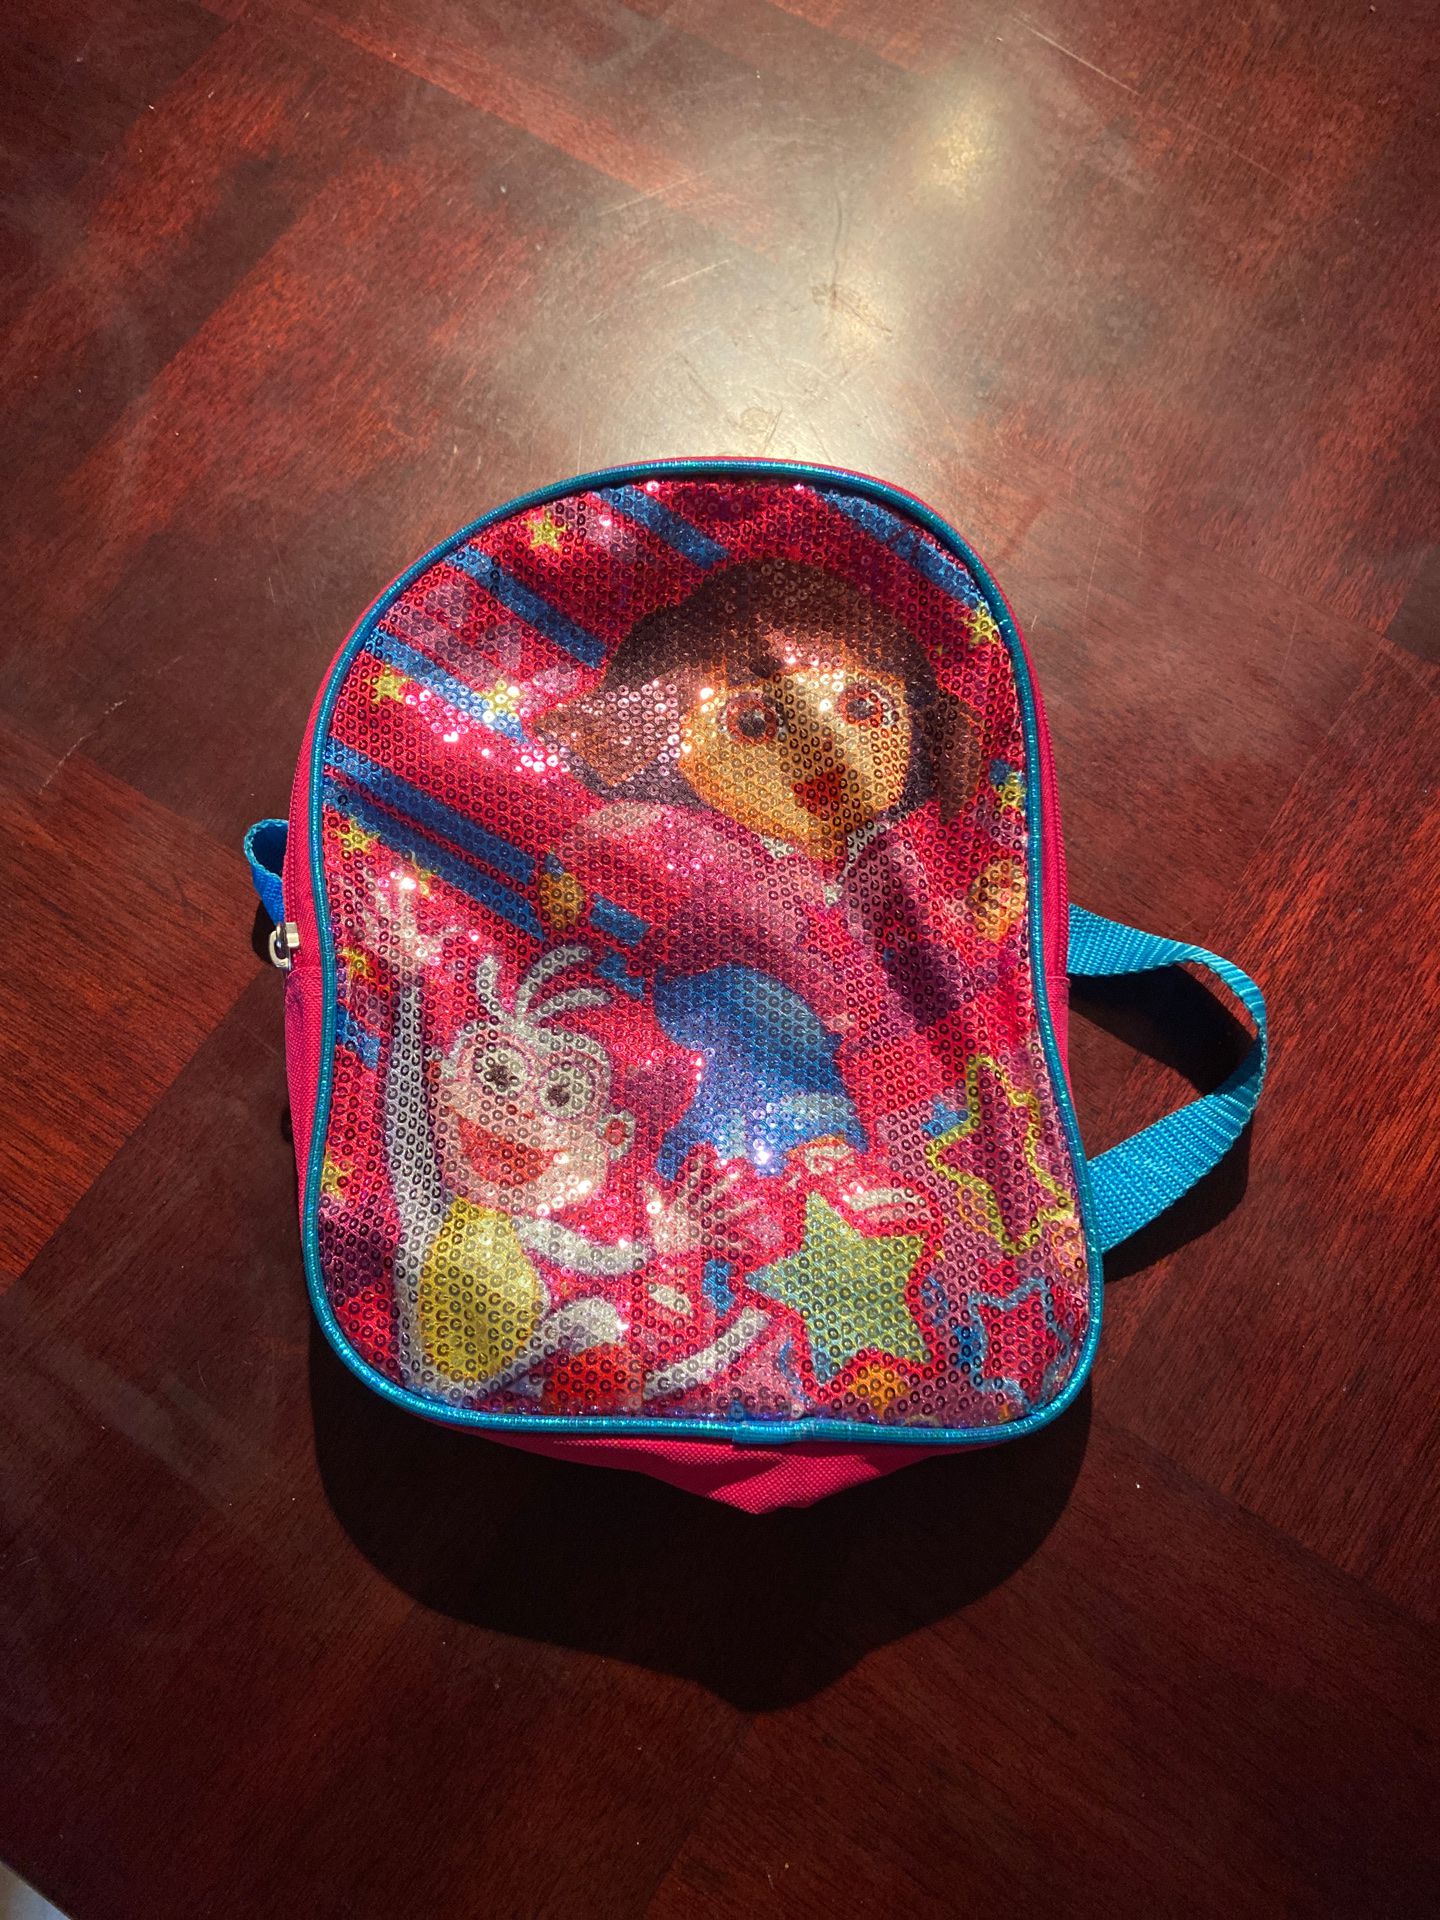 Dora backpack